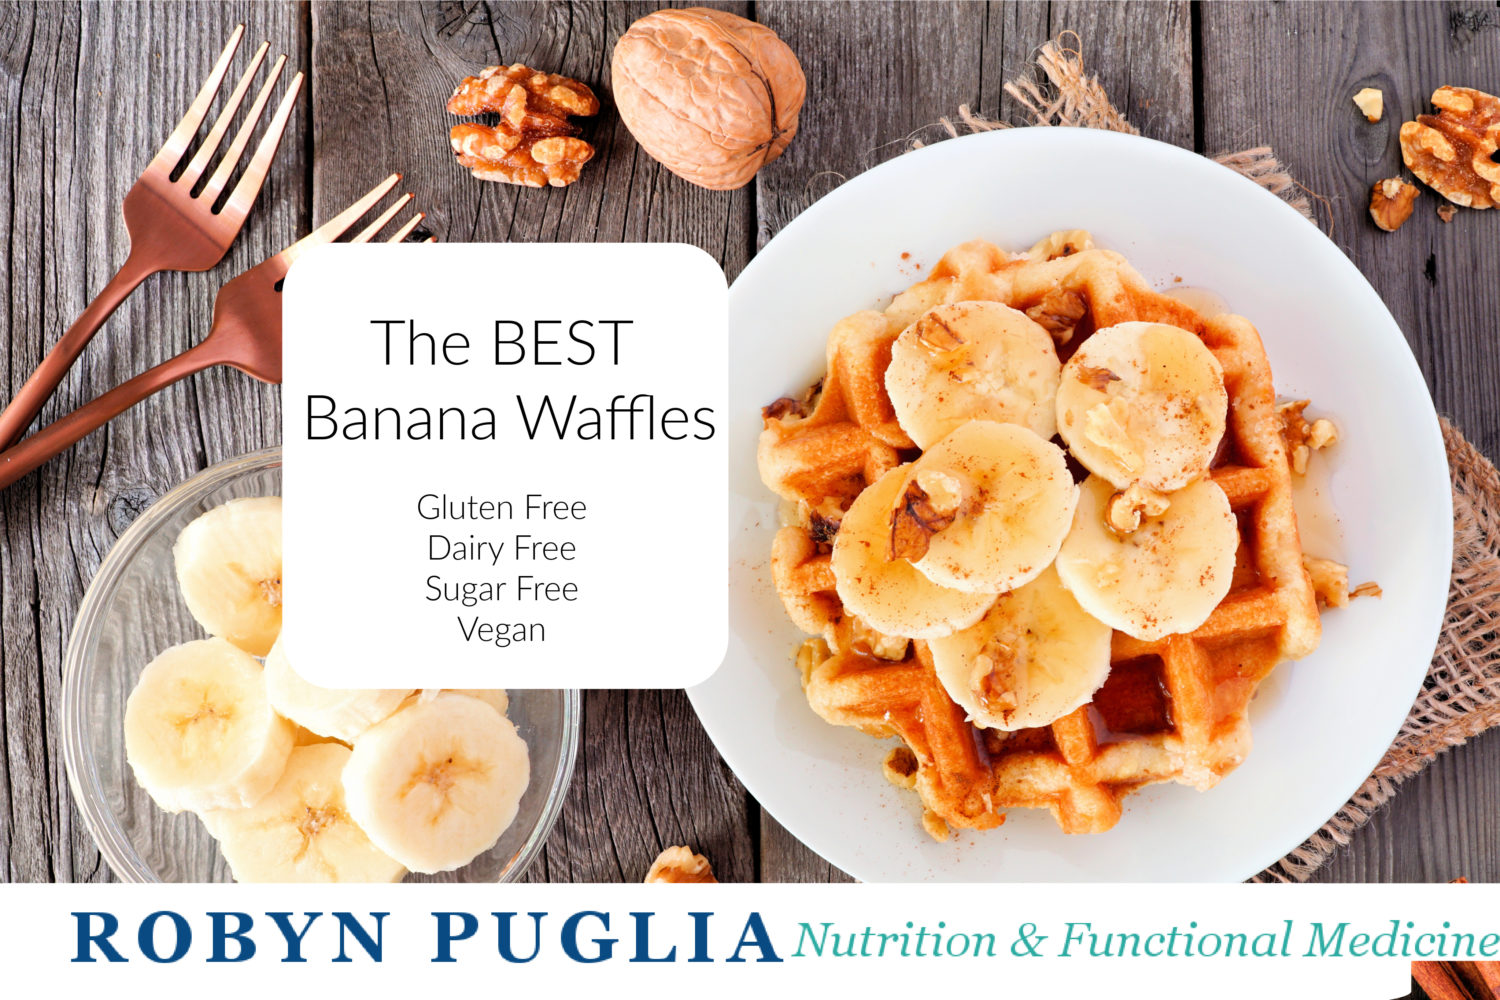 The BEST Banana Waffles